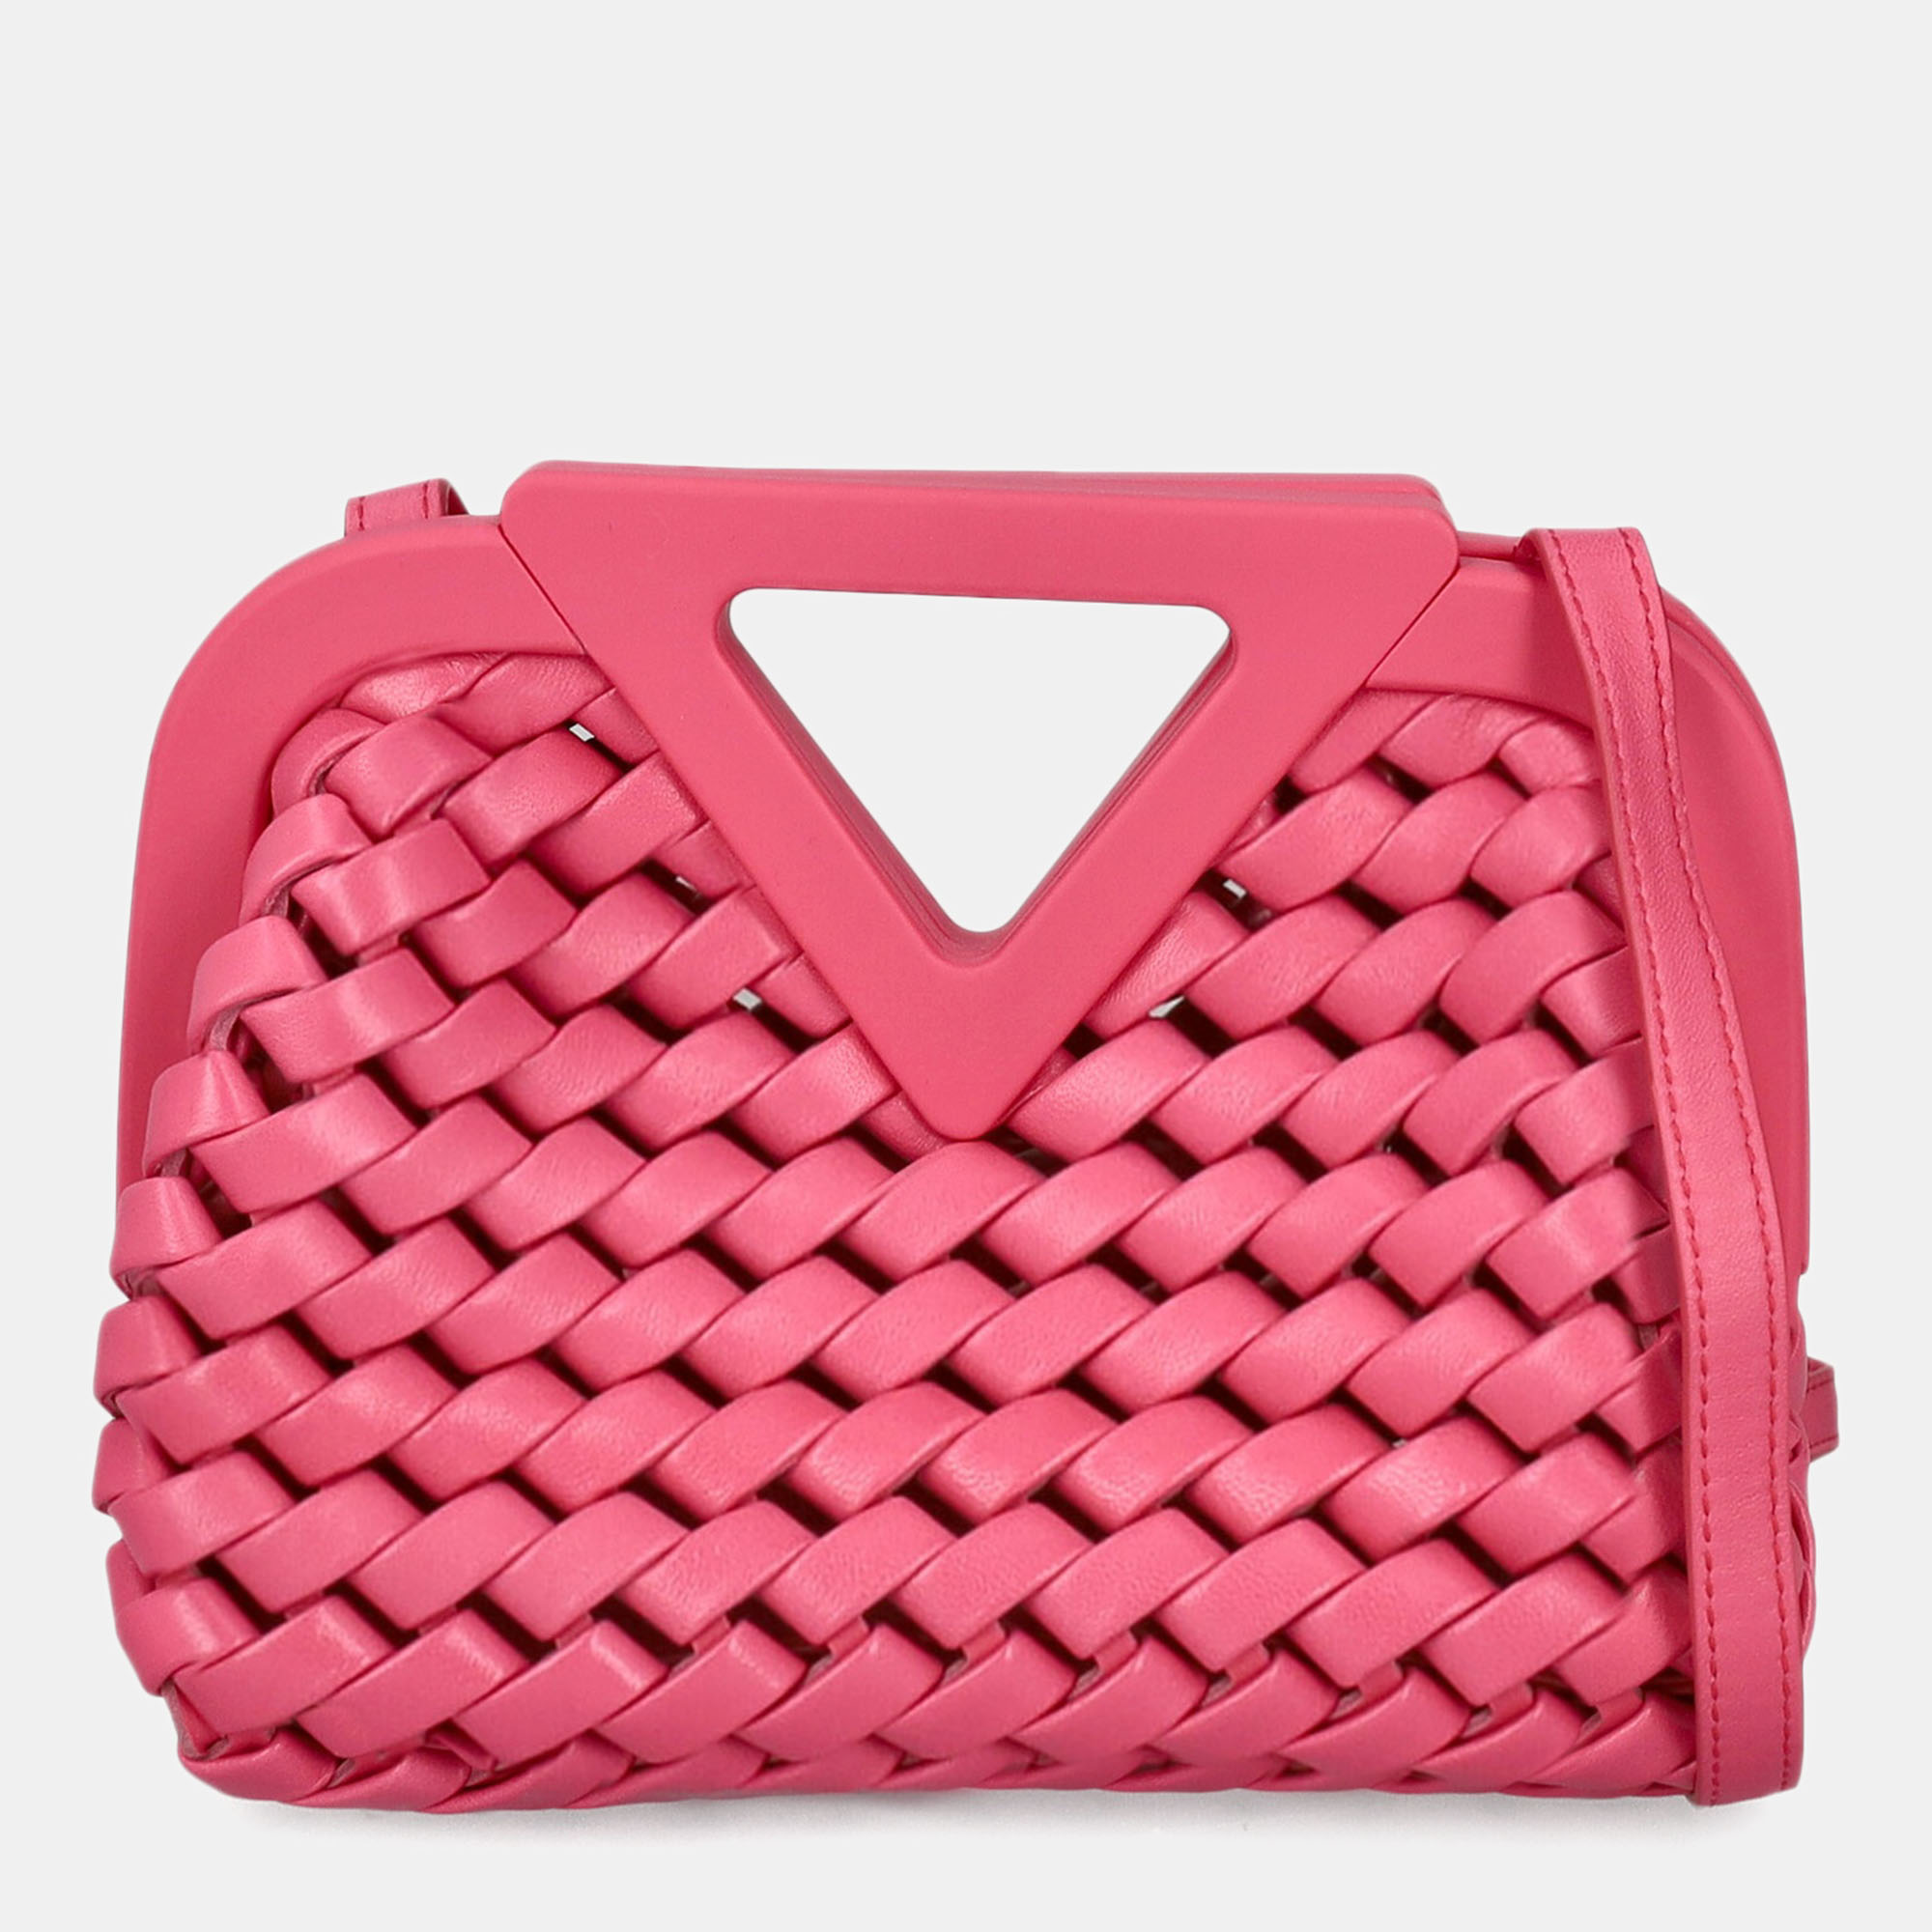 Bottega Veneta Point -  Women's Leather Cross Body Bag - Pink - One Size